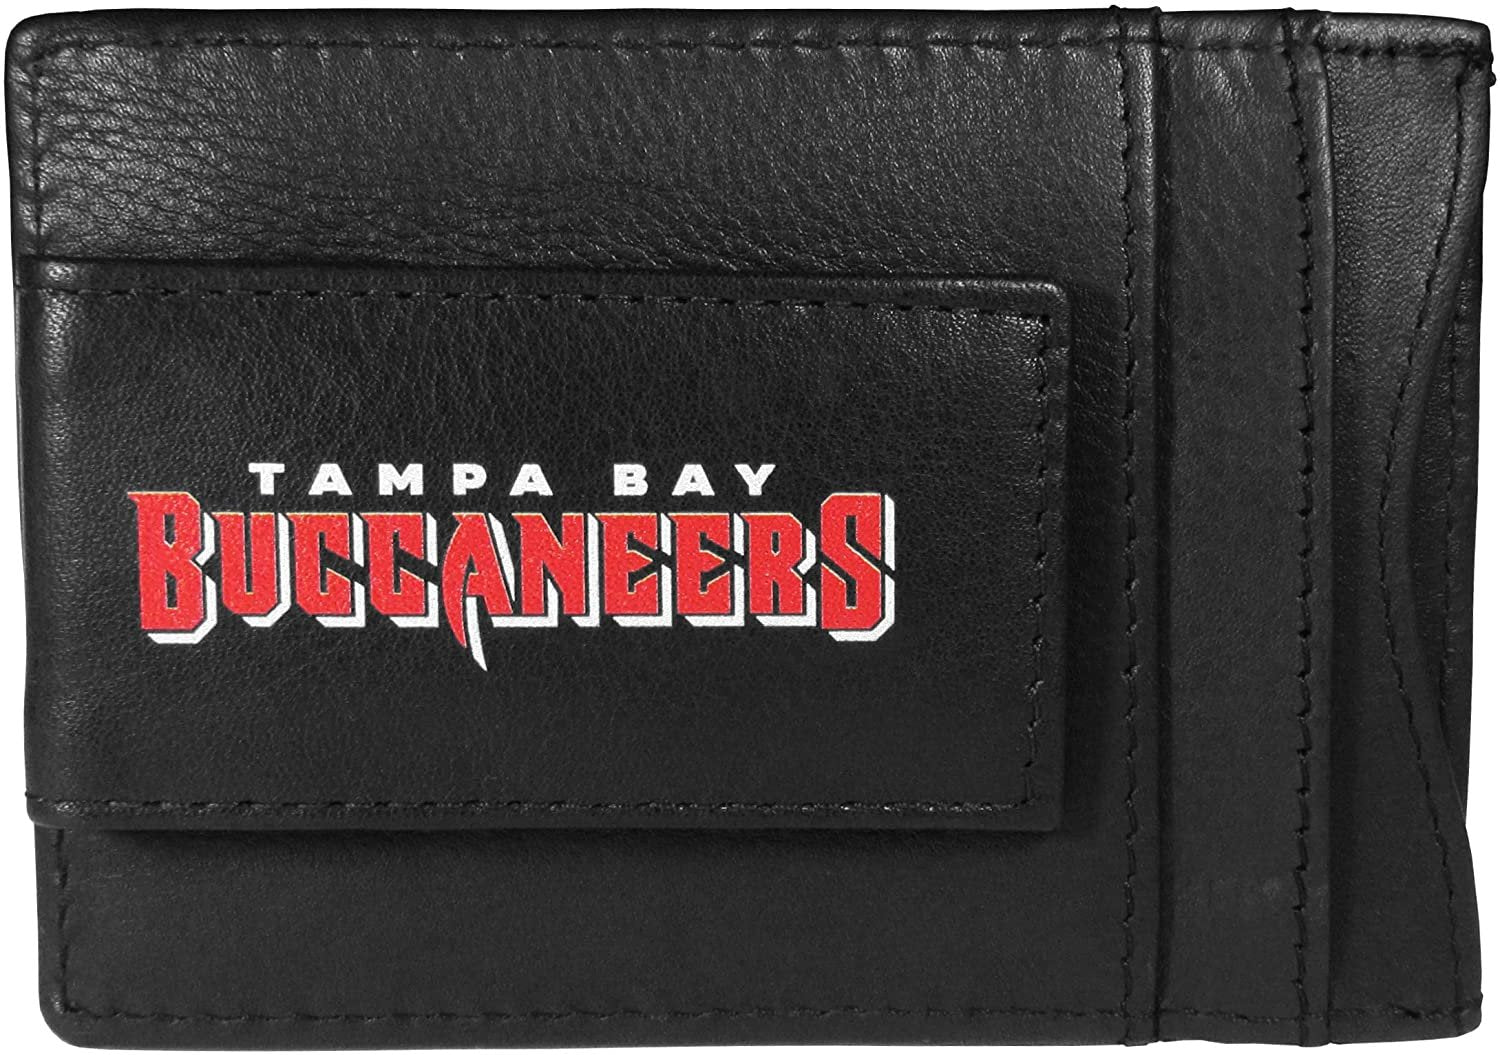 Tampa Bay Buccaneers Black Leather Wallet, Front Pocket Magnetic Money Clip, Printed Logo